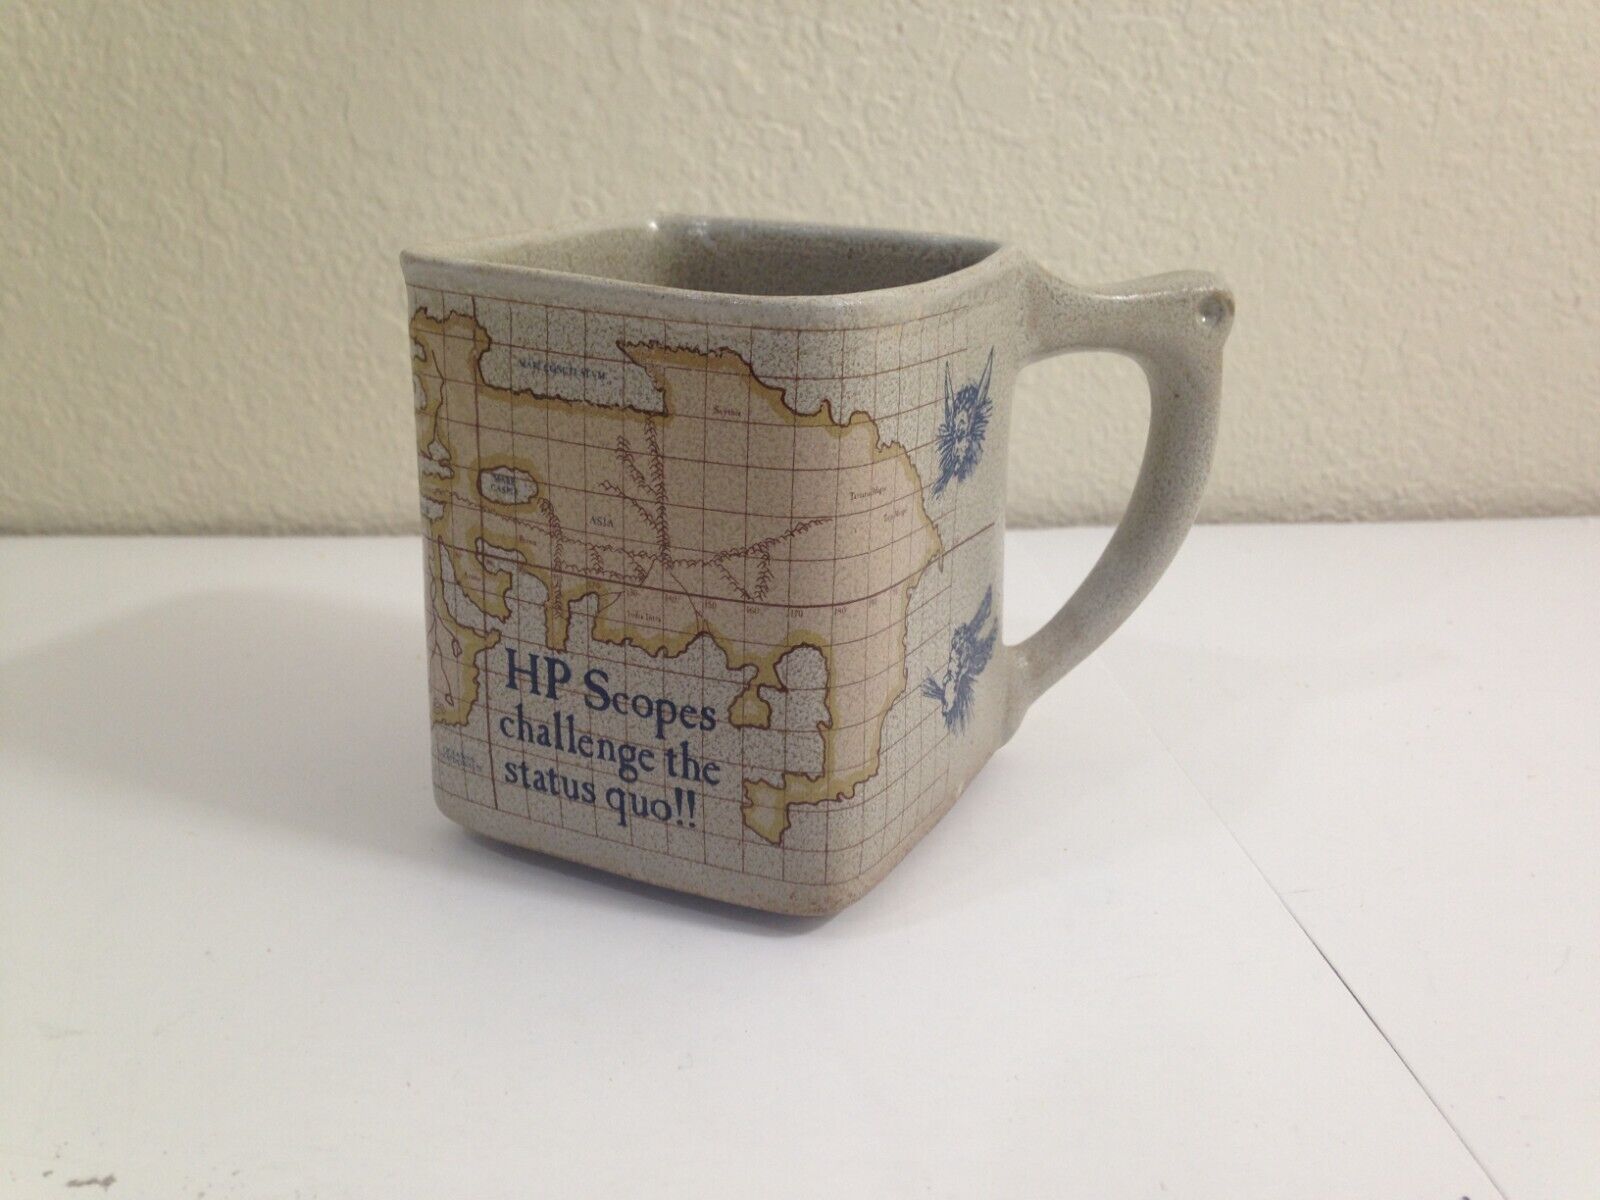 Vtg HP Hewlett Packard Scopes Coffee mug cup square globe advertising retro mcm